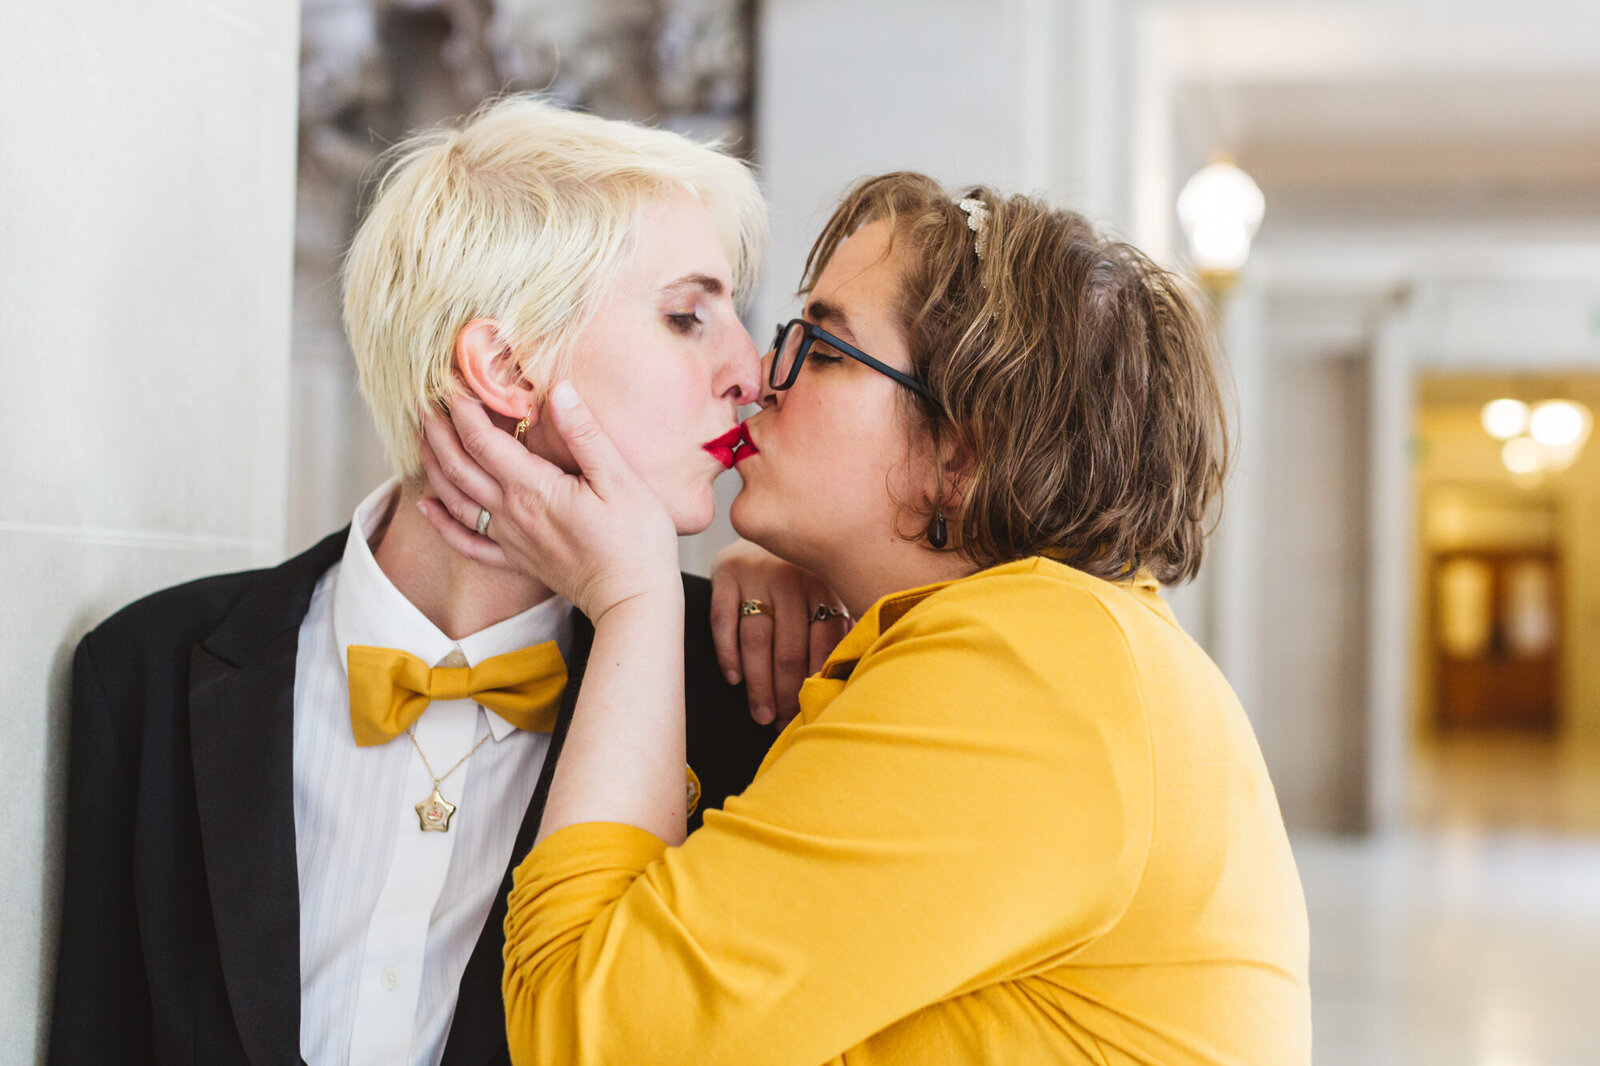 LGBTQ+ queer couple's wedding photo ideas